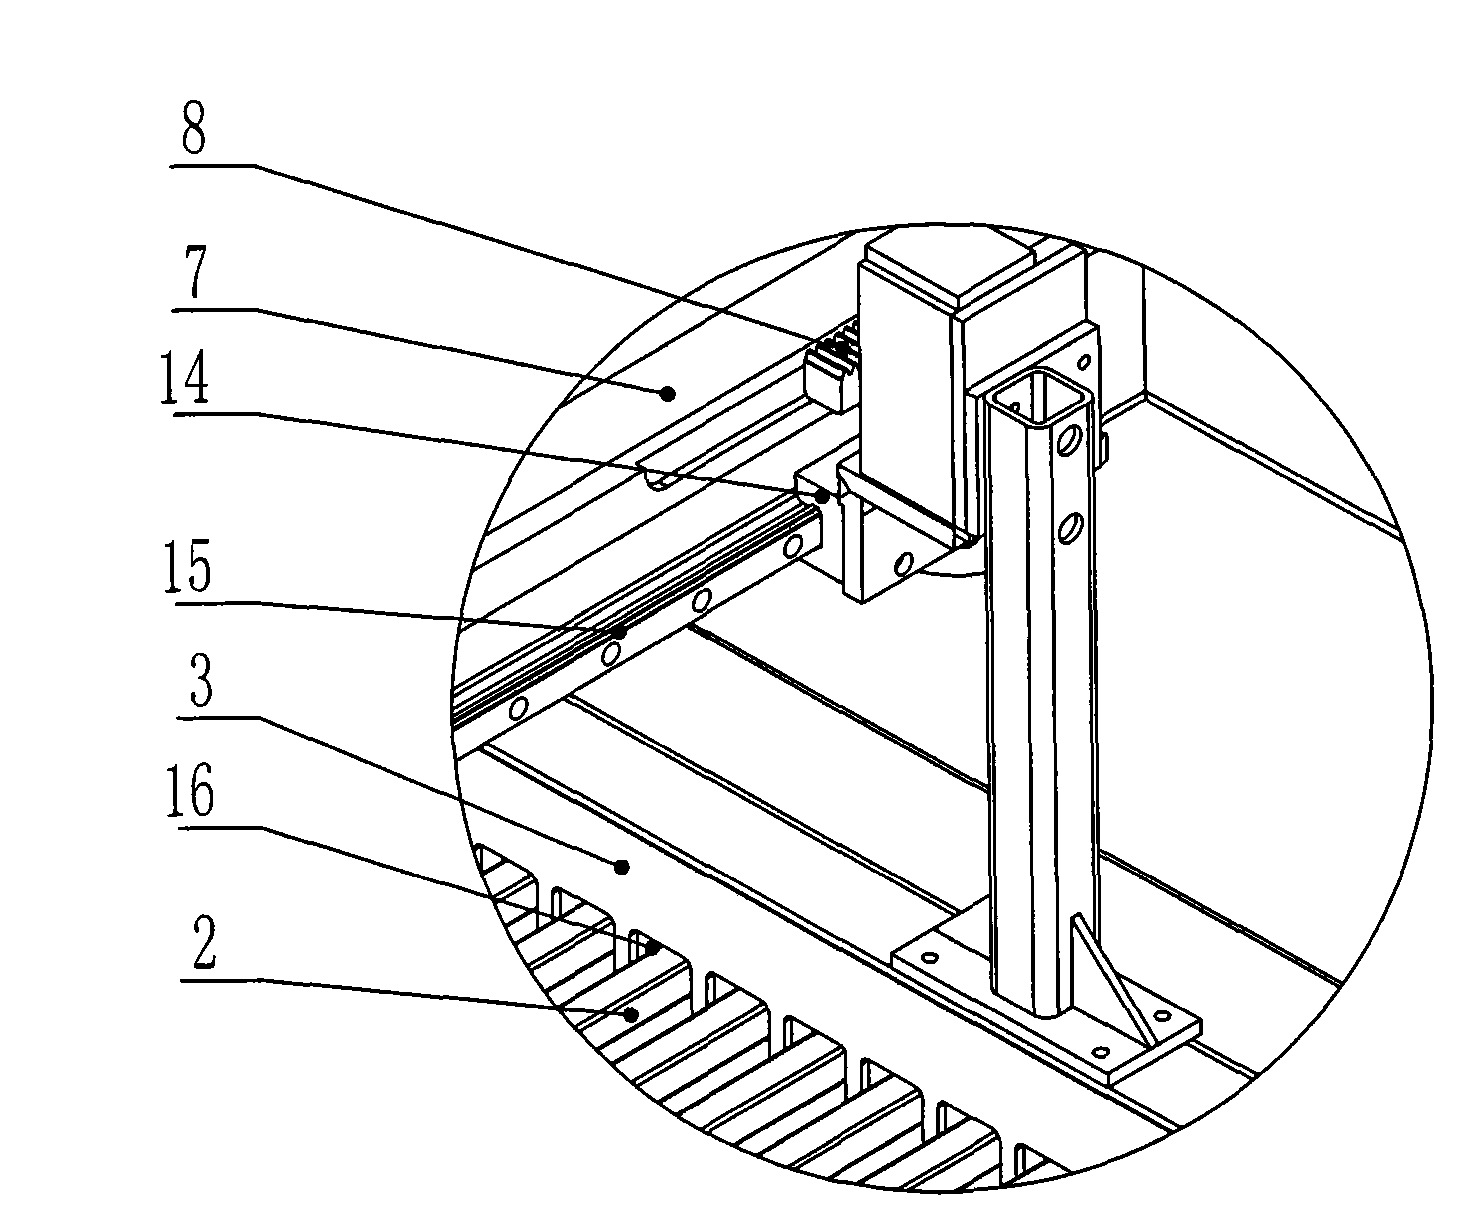 Laser-cutting automatic loading and unloading manipulator